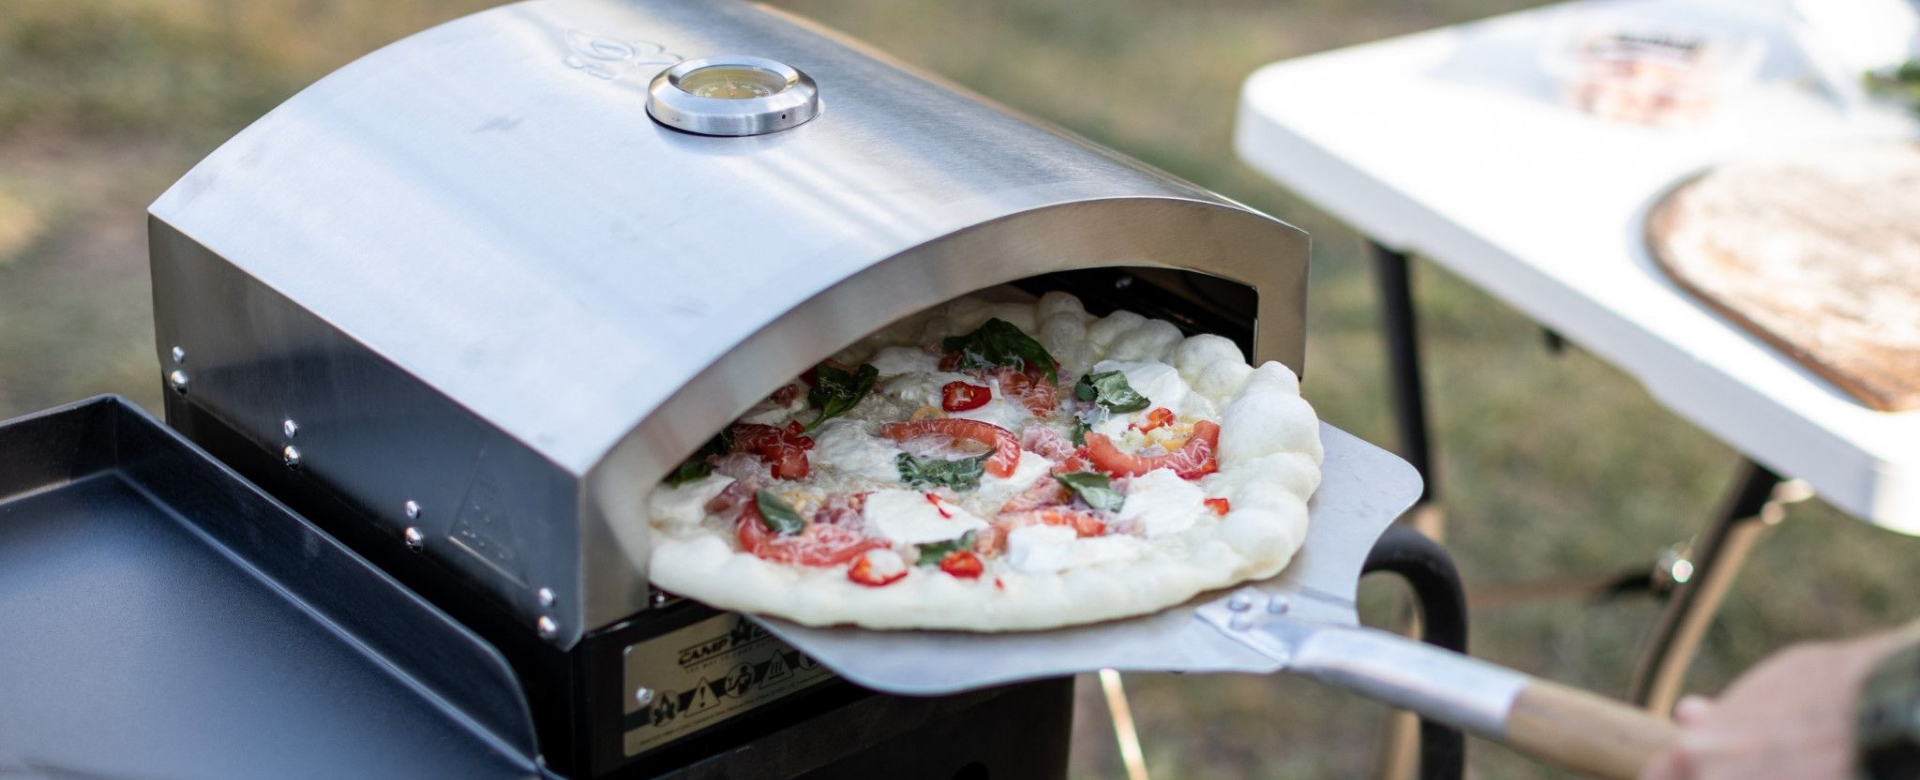 Best Pizza Oven Accessories, Blog